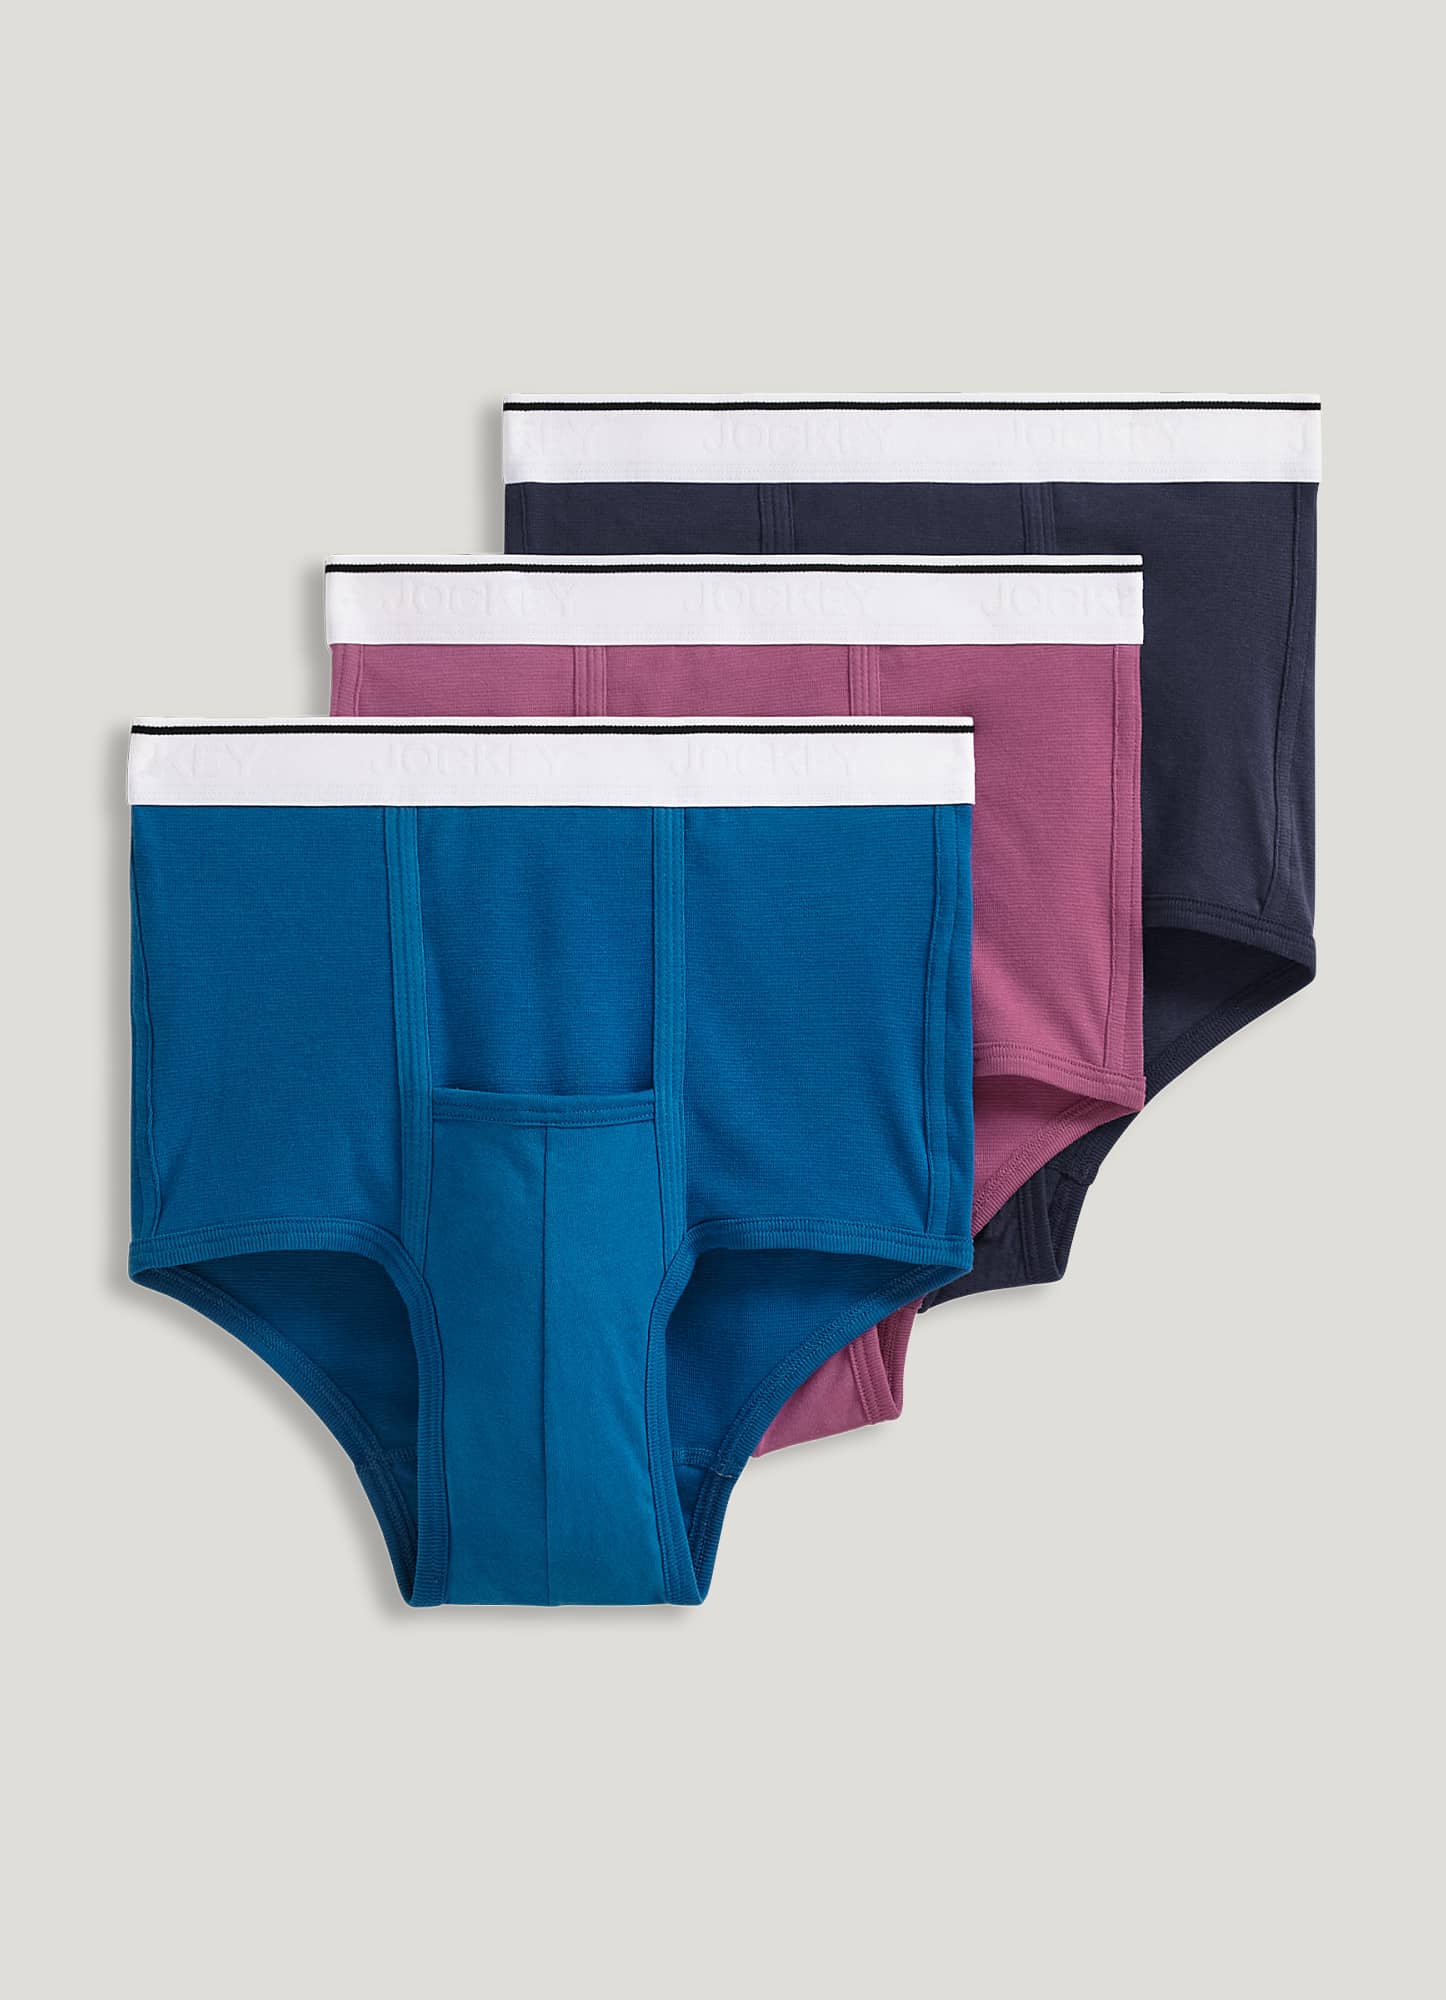 Buy Jockey Men's Underwear Elance Poco Brief- 2 Pack, black, L